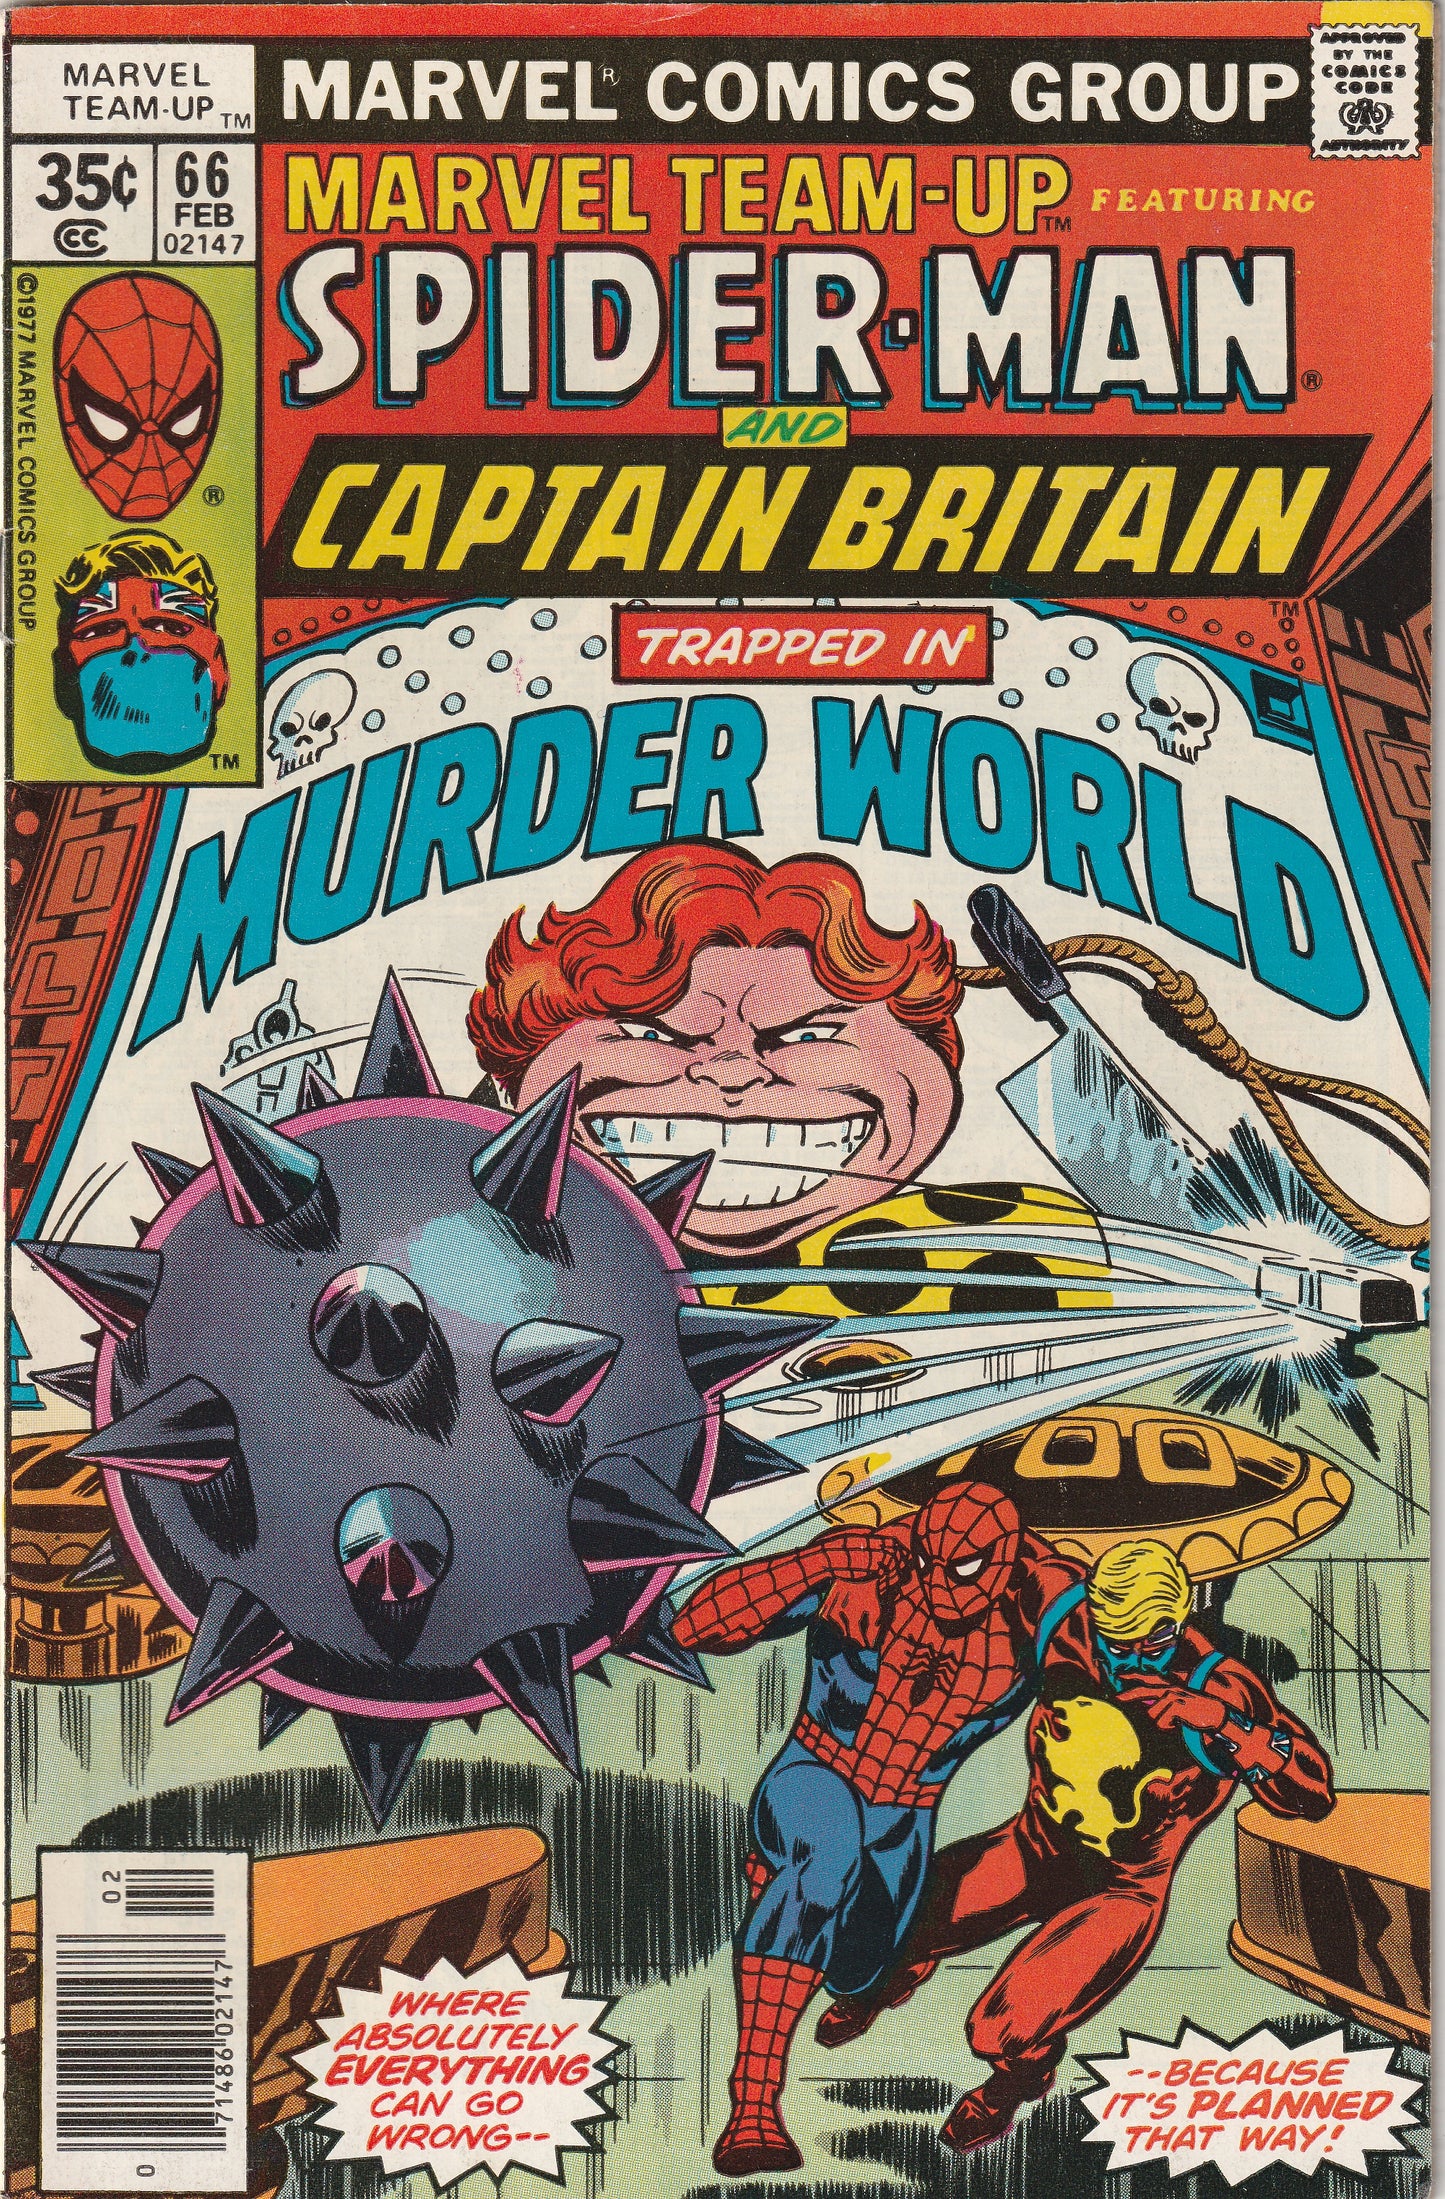 Marvel Team-Up #66 (1978) - Spider-Man & Captain Britain